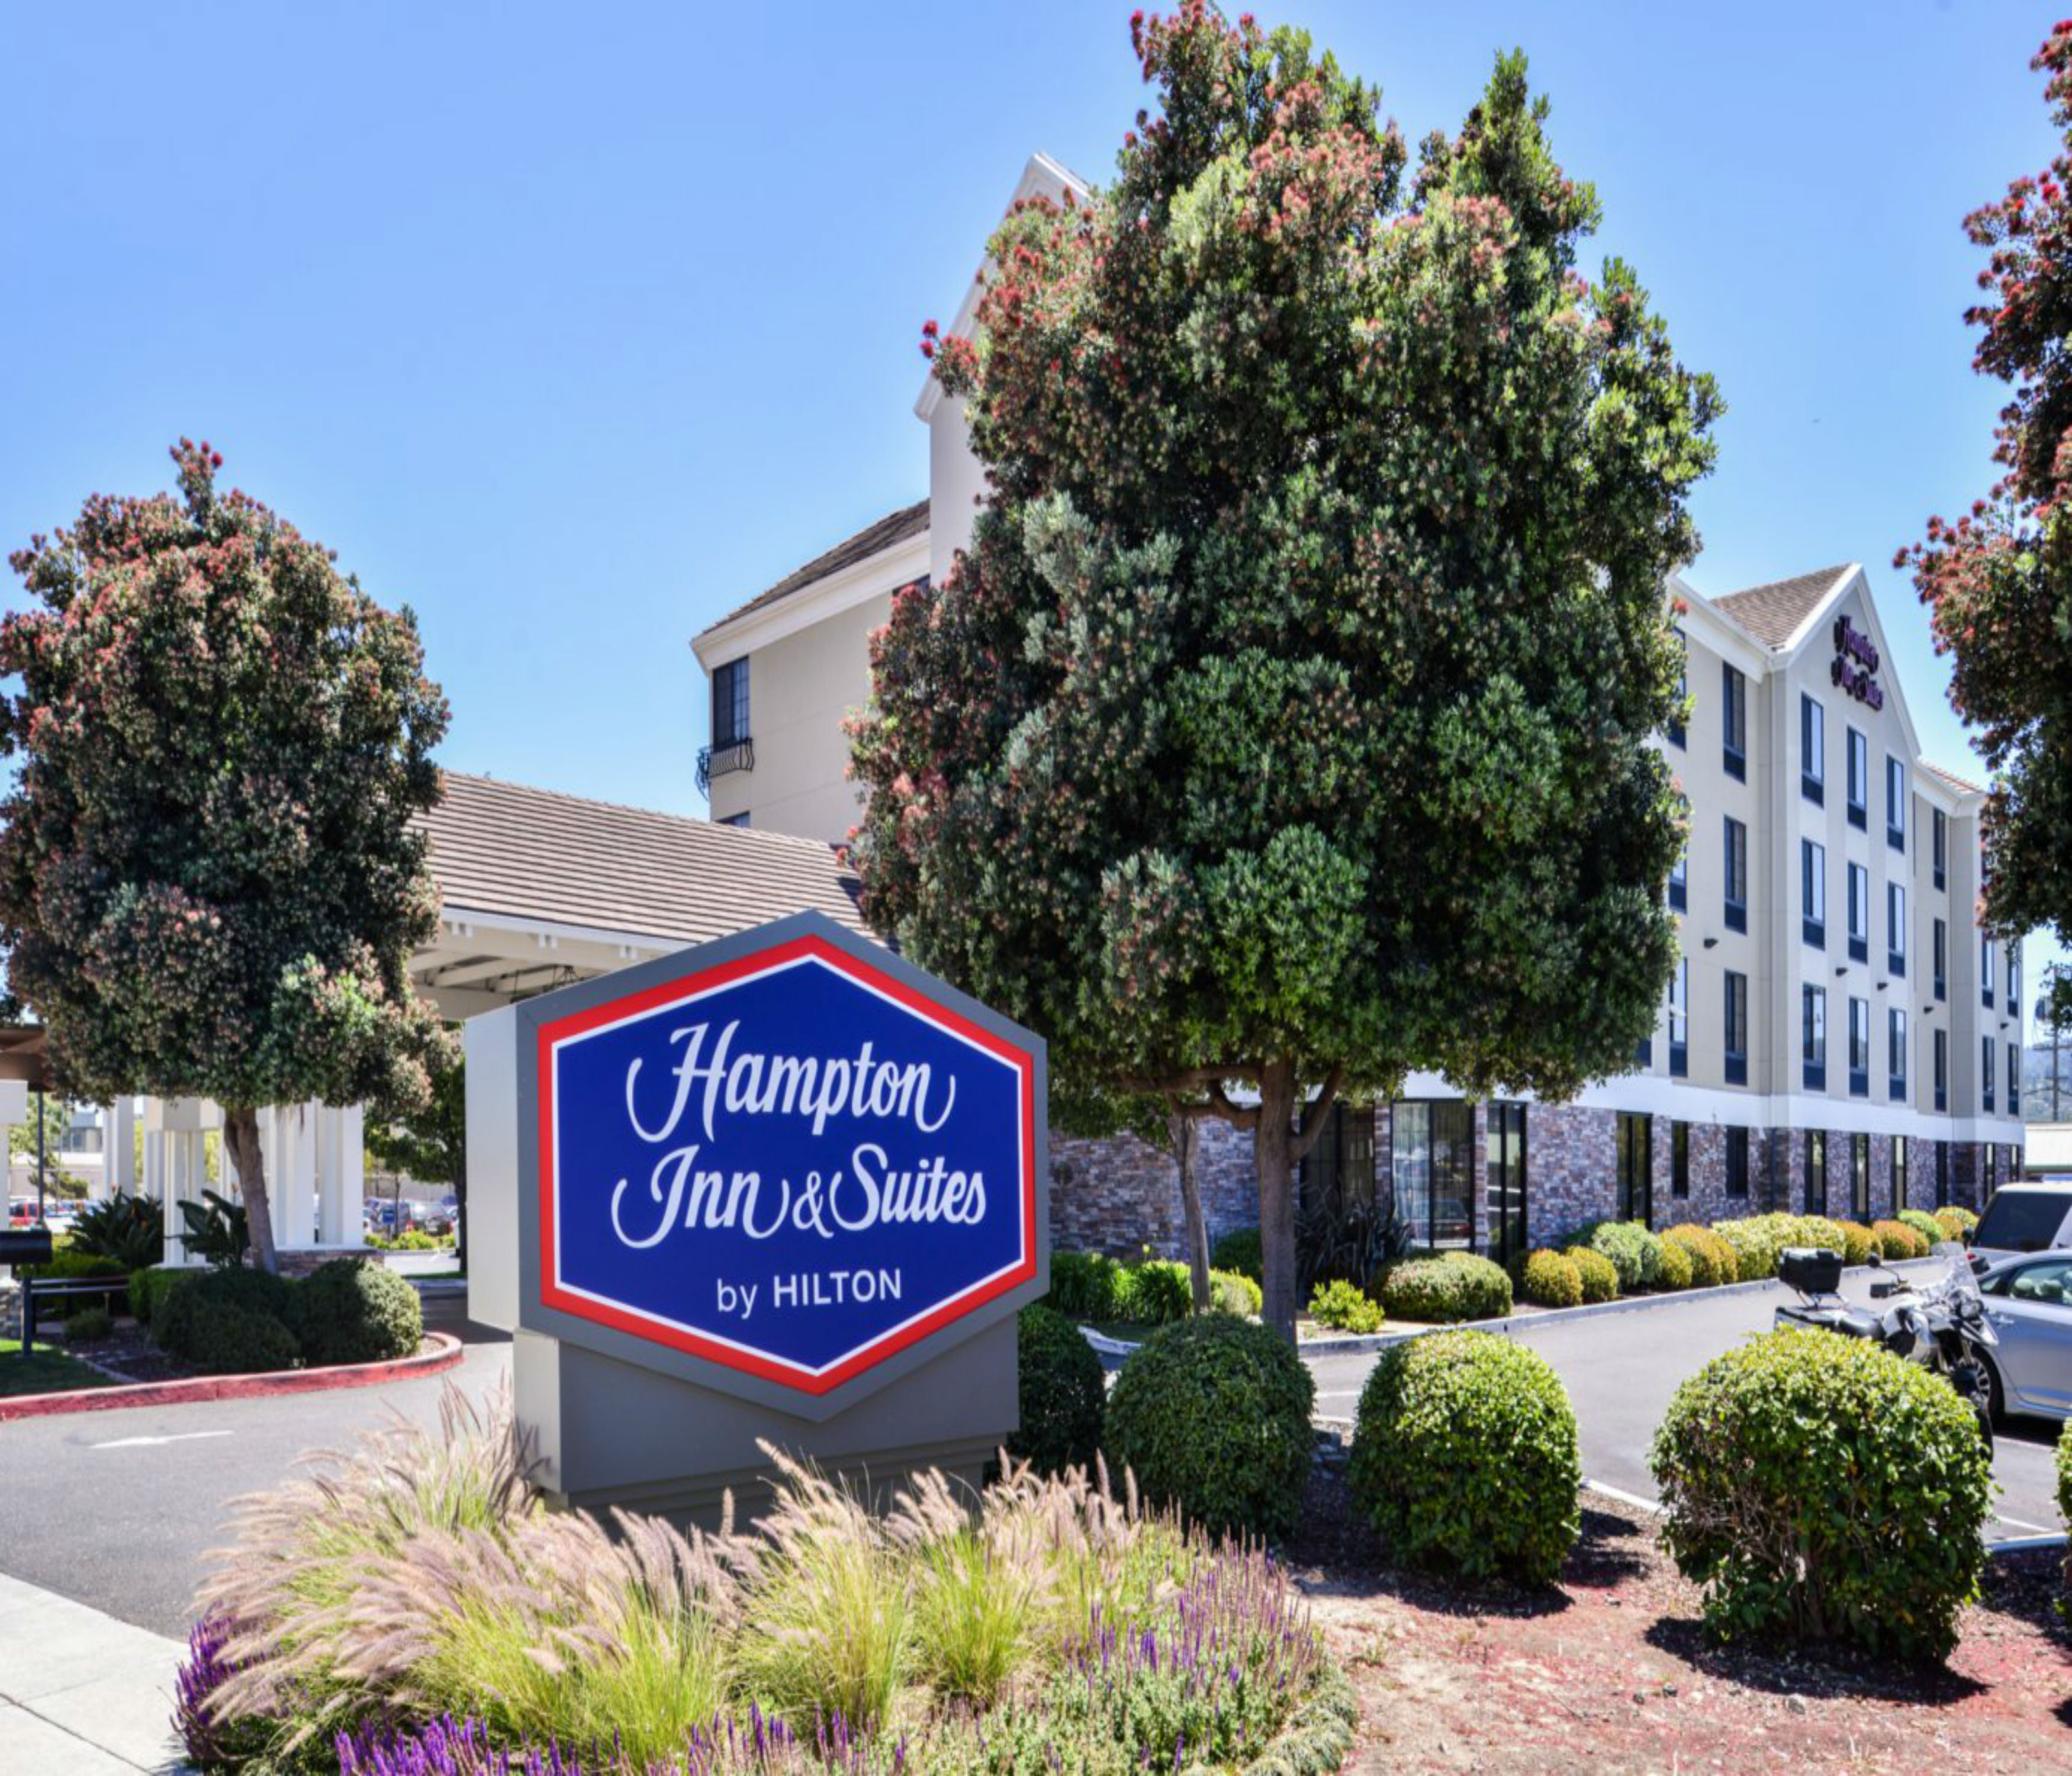 Hampton Inn & Suites San Francisco-Burlingame-Airport South Hotel, CA - Exterior Sign